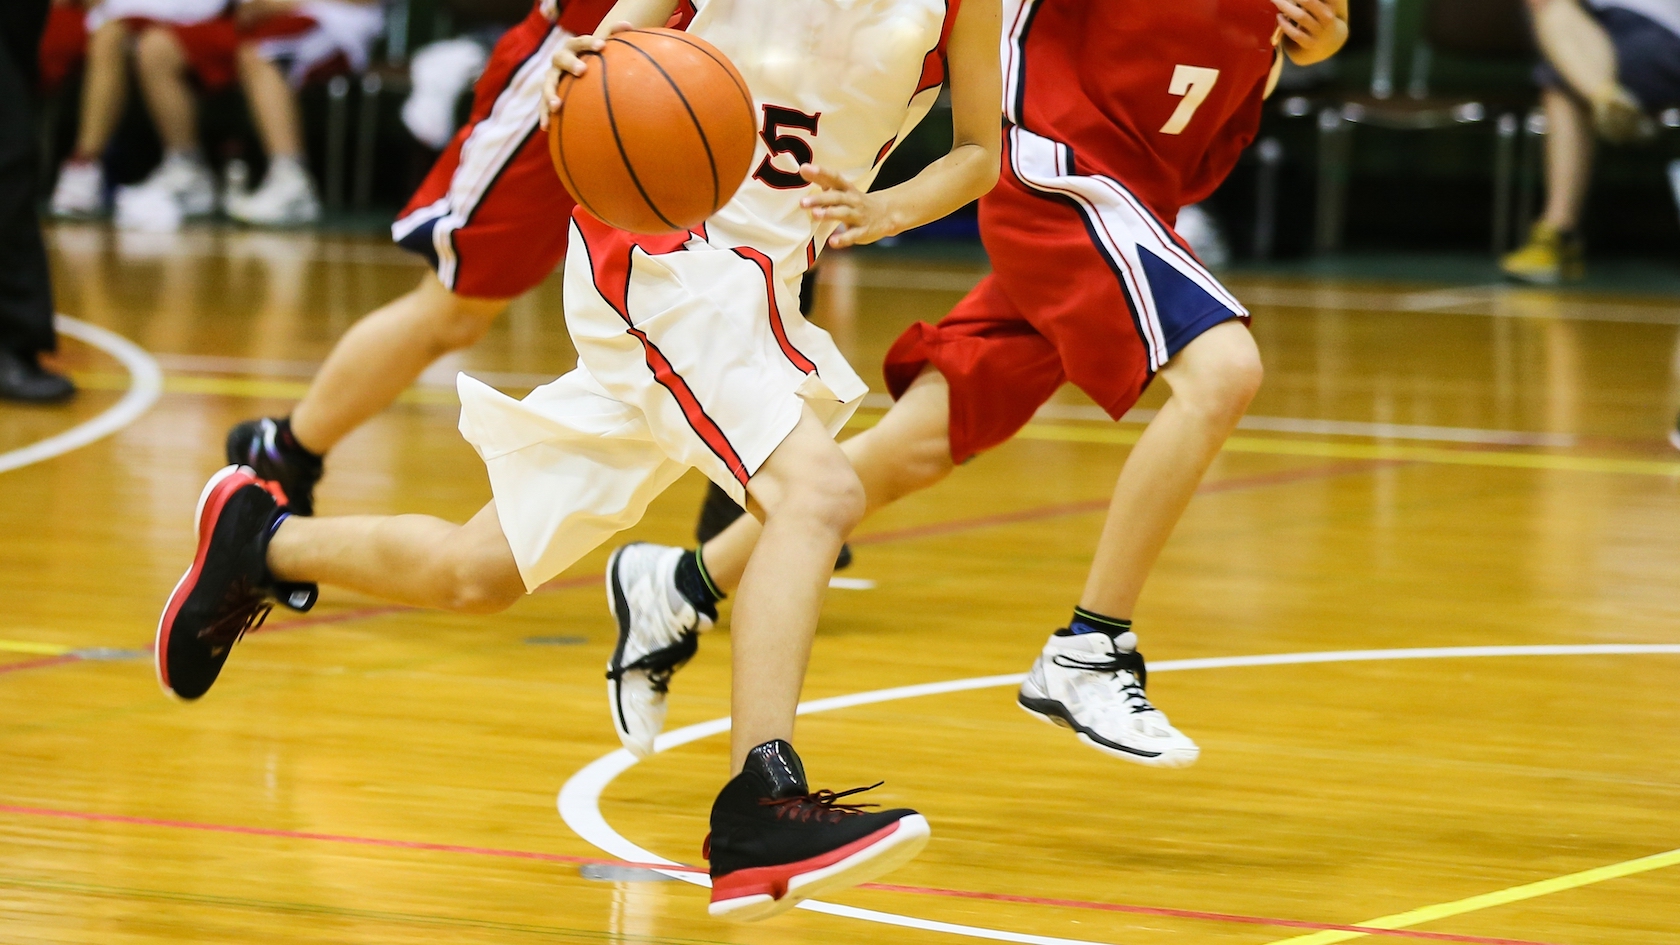 Adobe Stock 106445247. Japanese high school boys playing basketball.